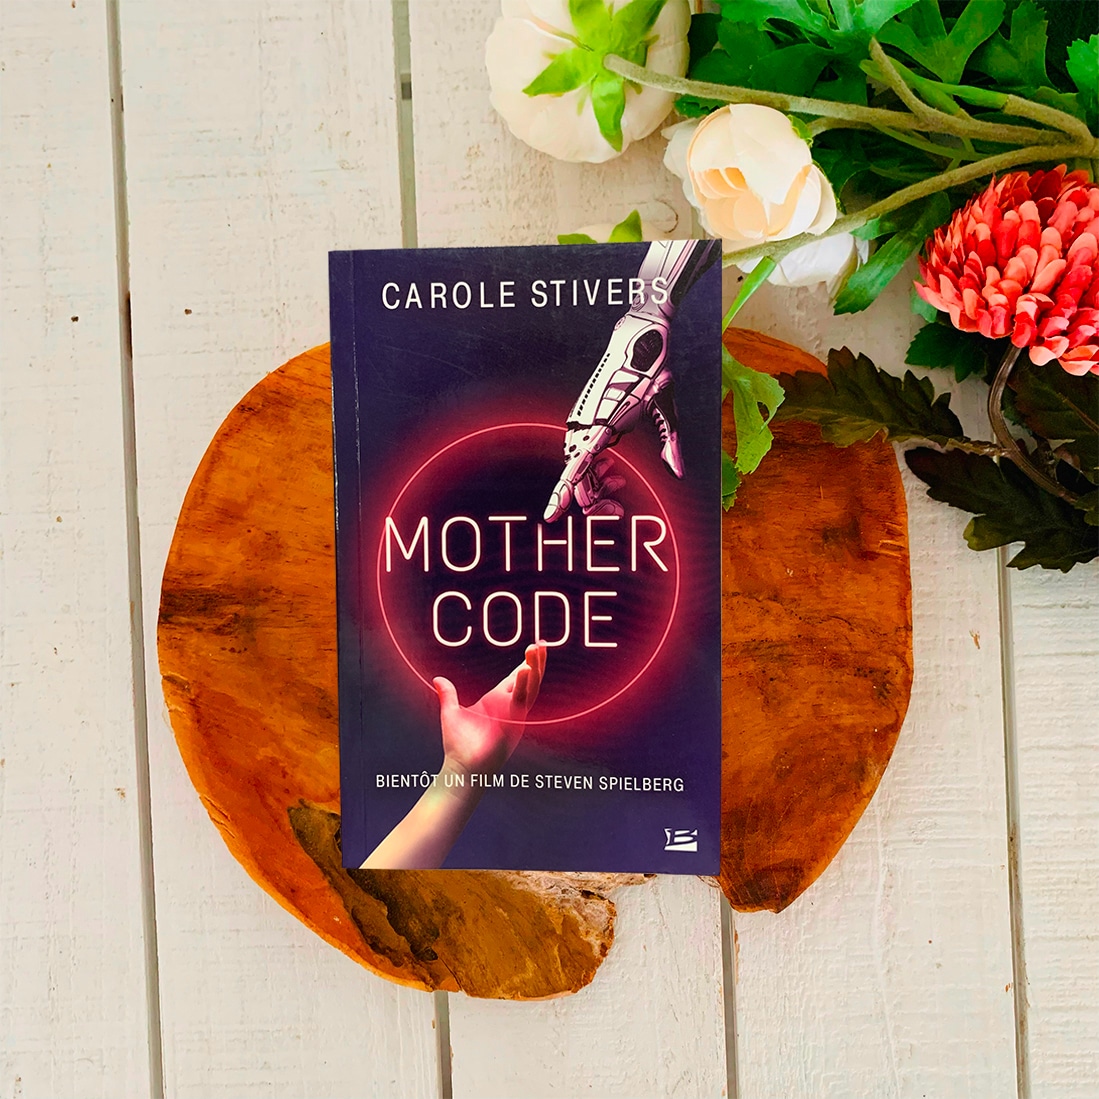 Mother code - Carole Stivers